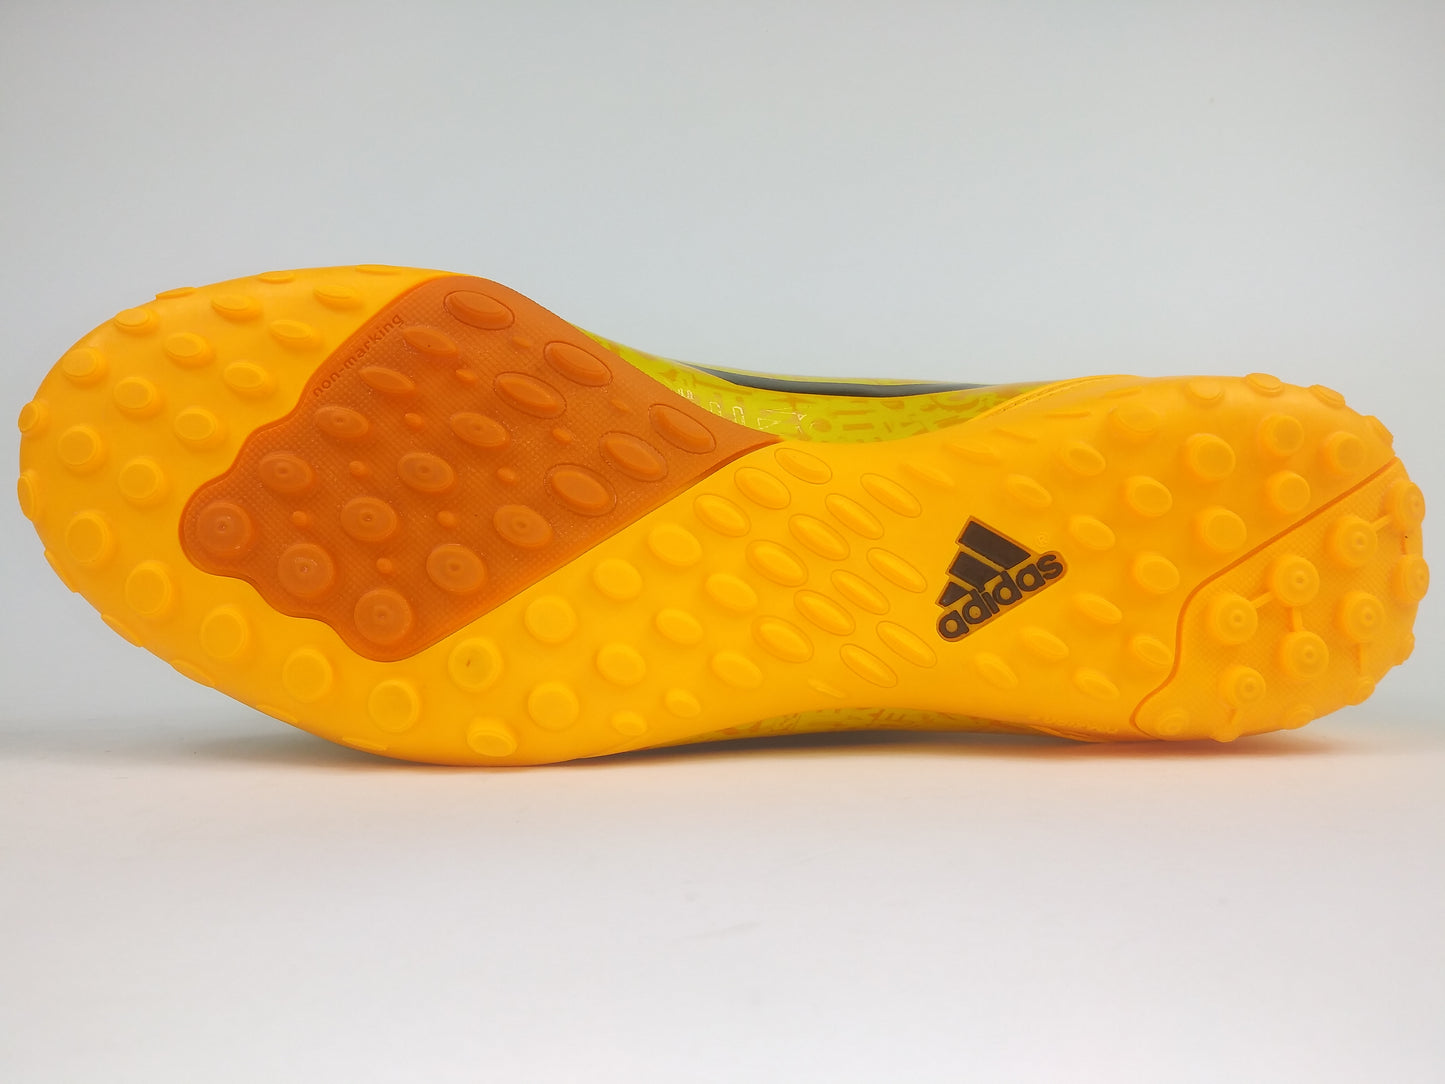 Adidas F10 TF Turf messi Yellow Black